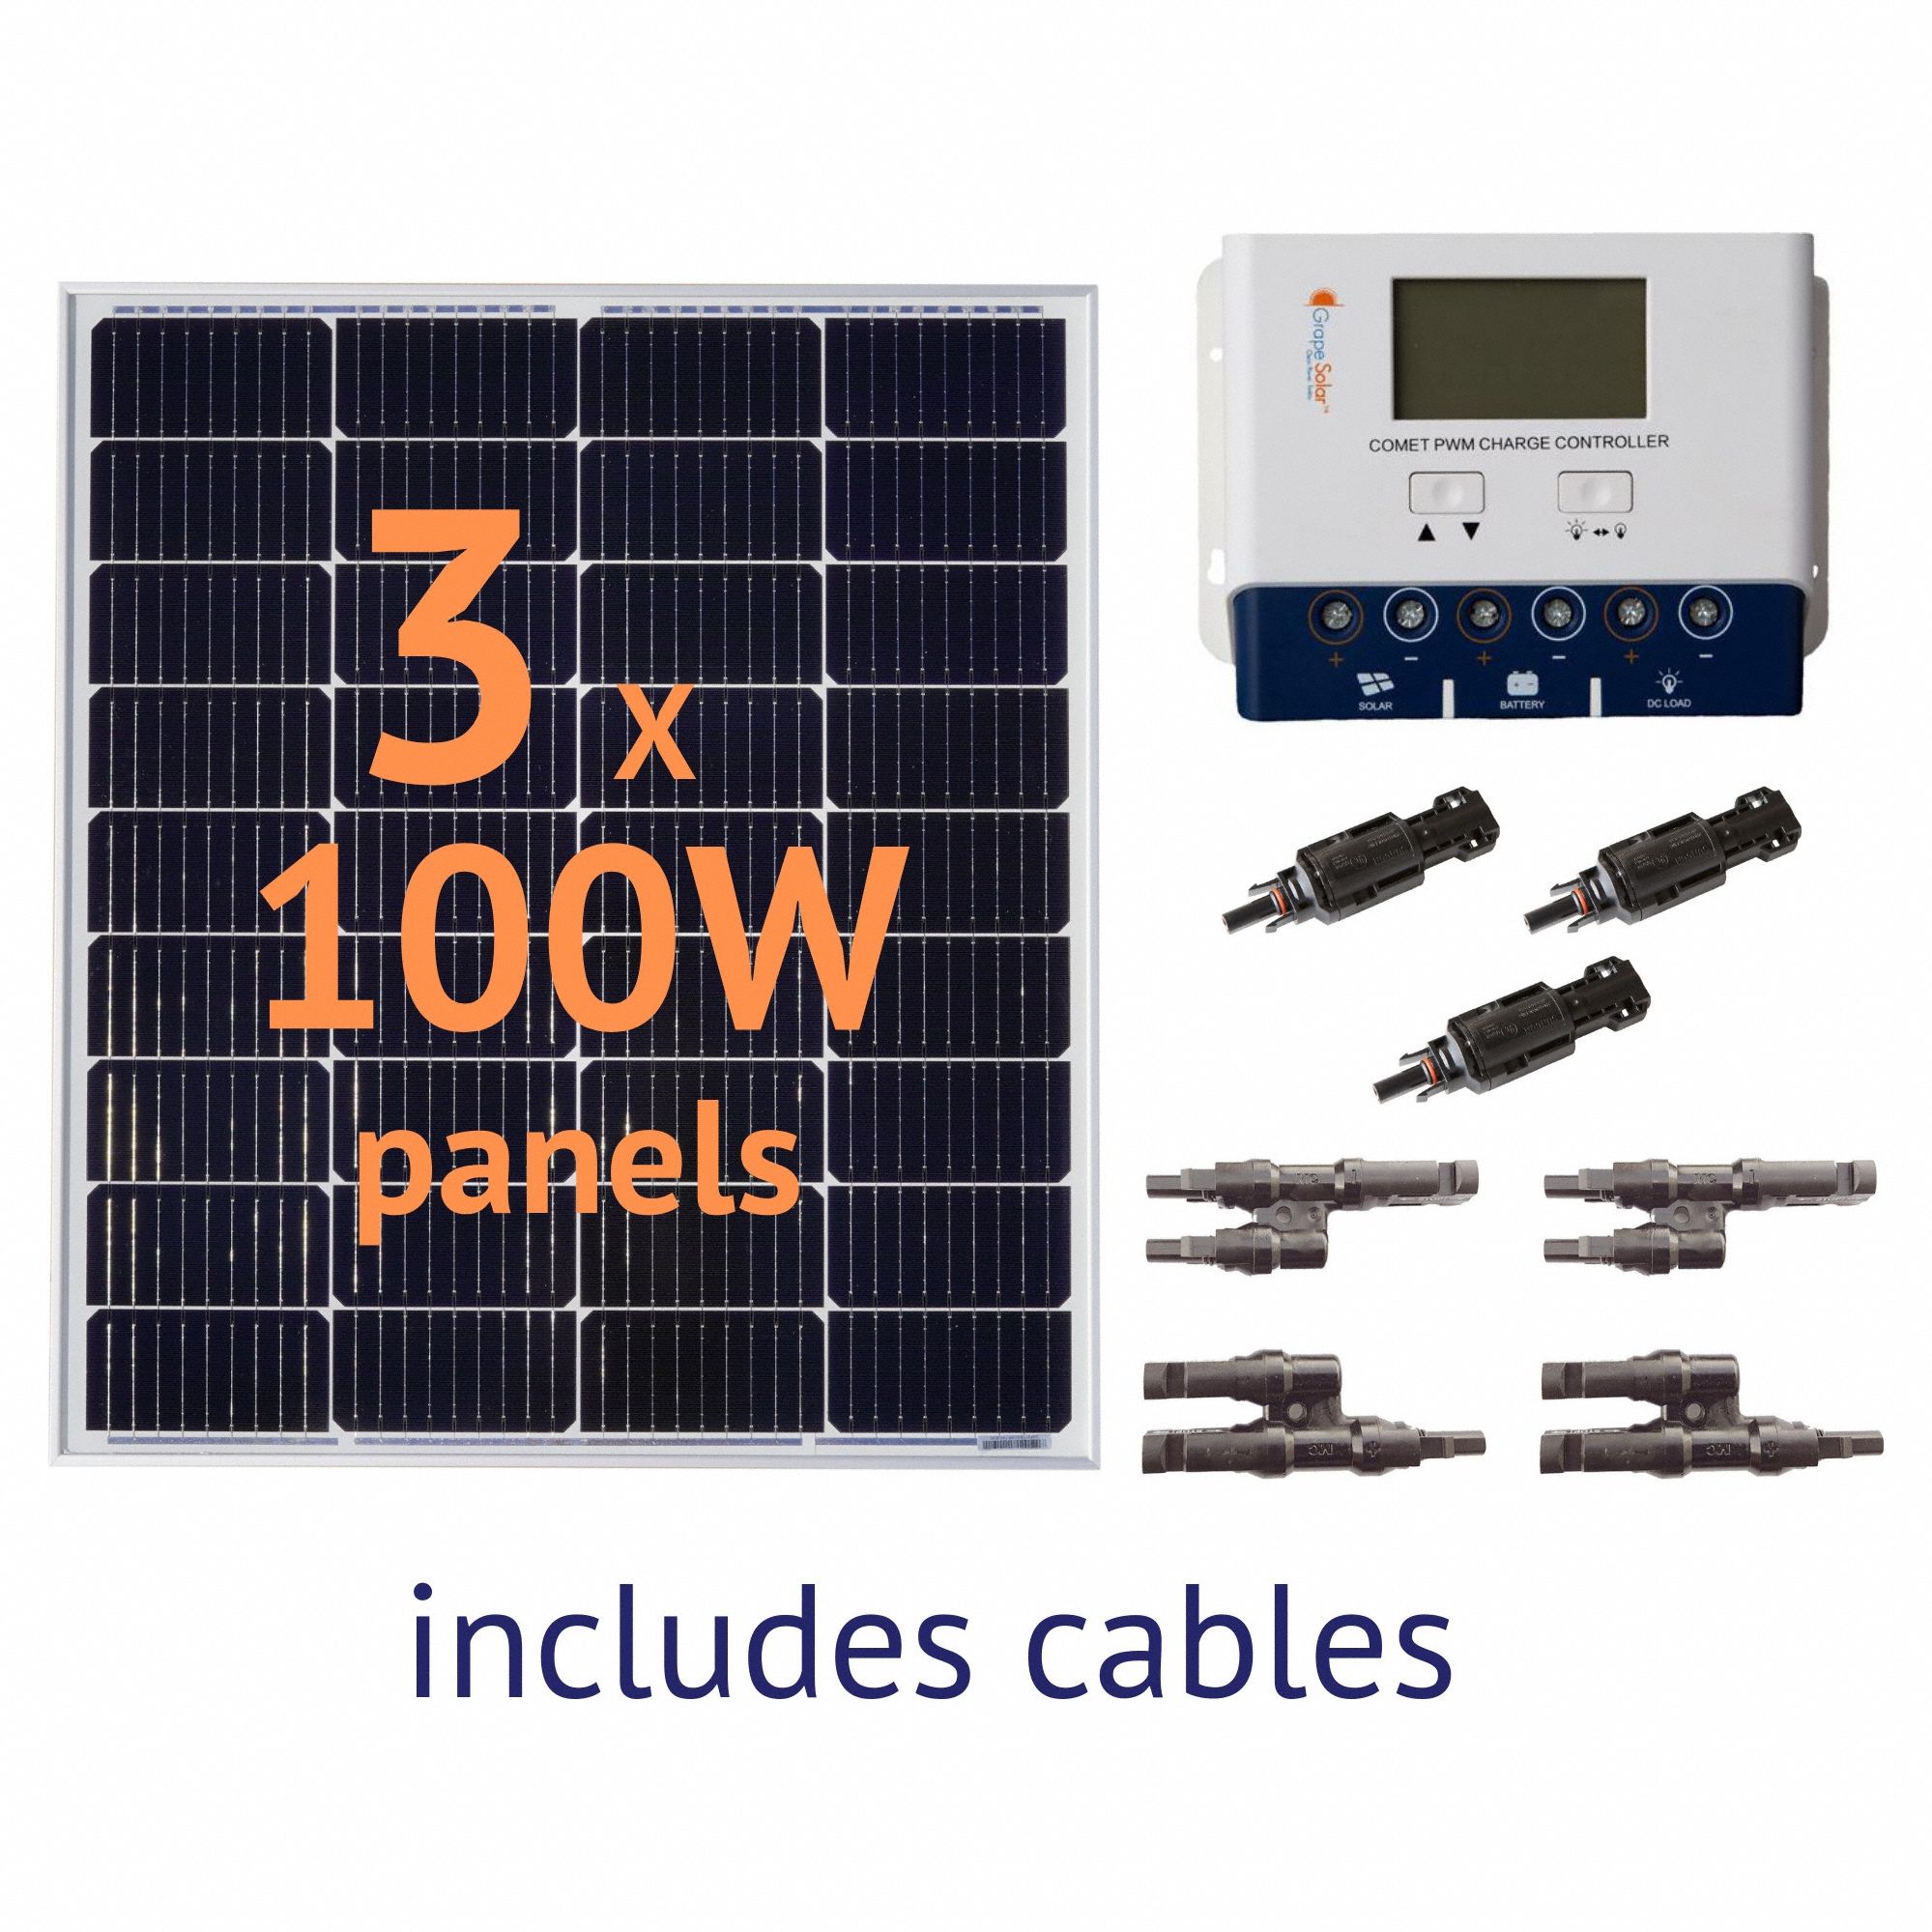 Solar Panel Kit: 300 W Nominal Output Power, 18.0V DC, 3 Solar Panels, 18.0V DC